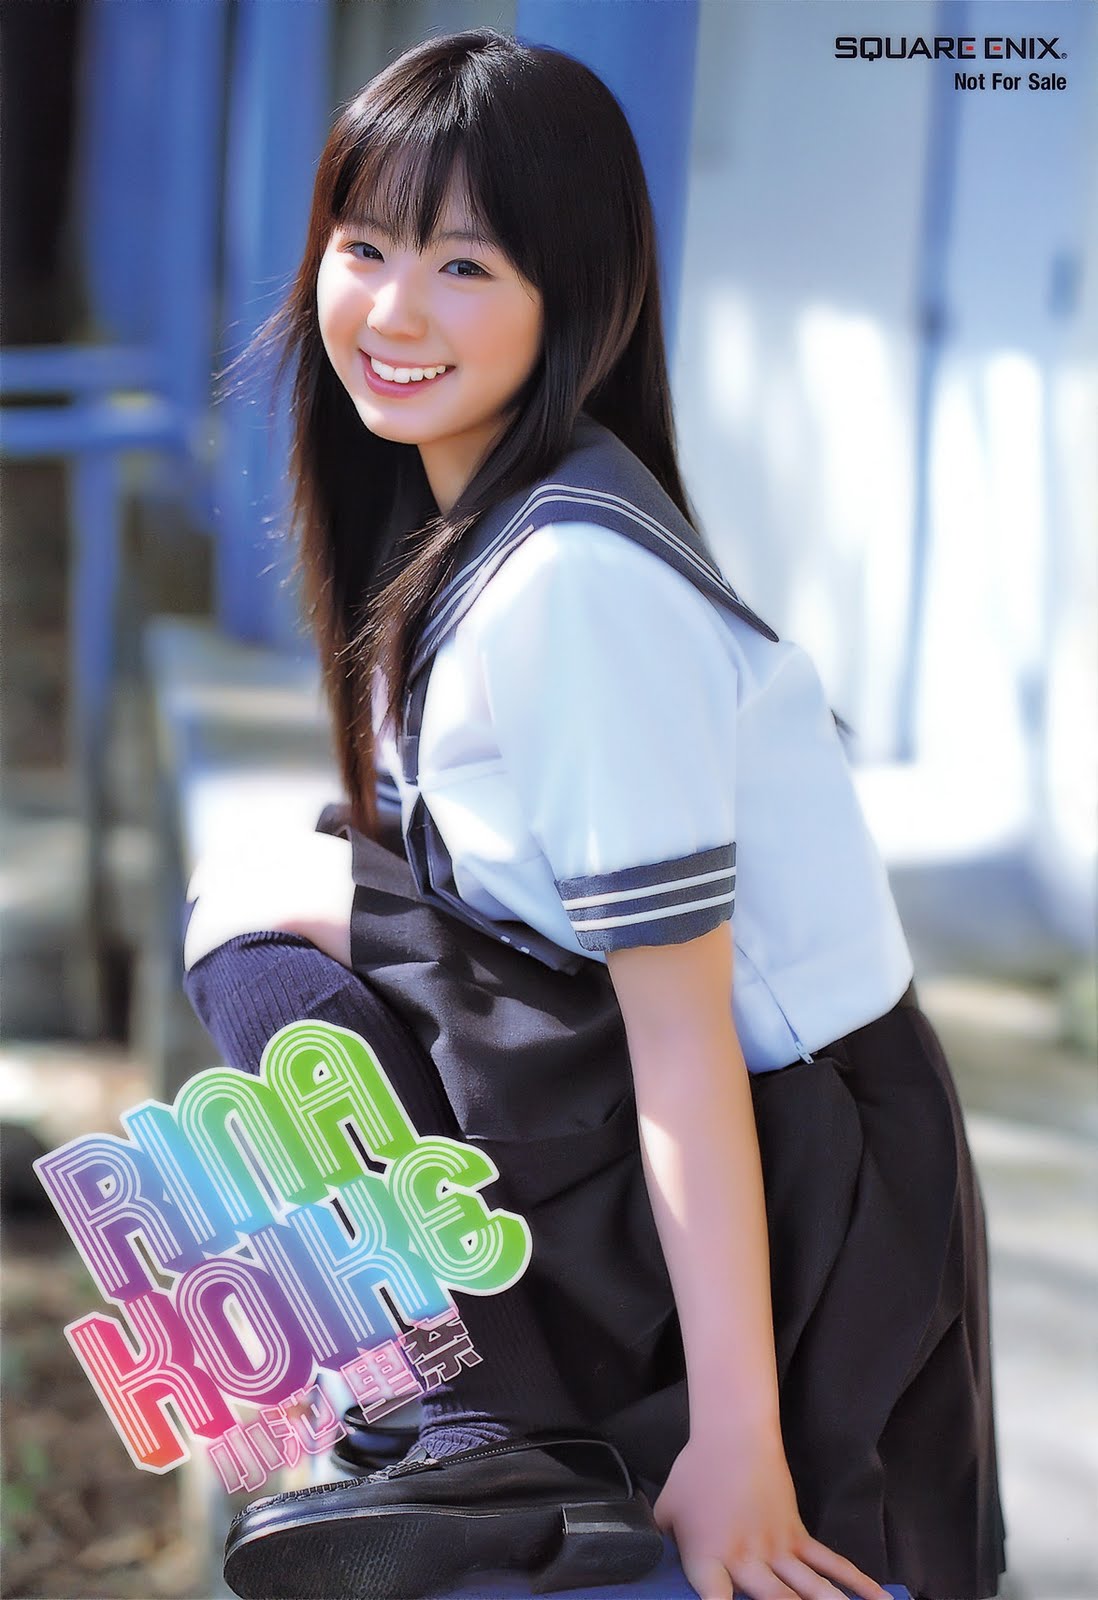 Rina Koike Japanese Actress 小池里奈 Cute Japanese Girl And